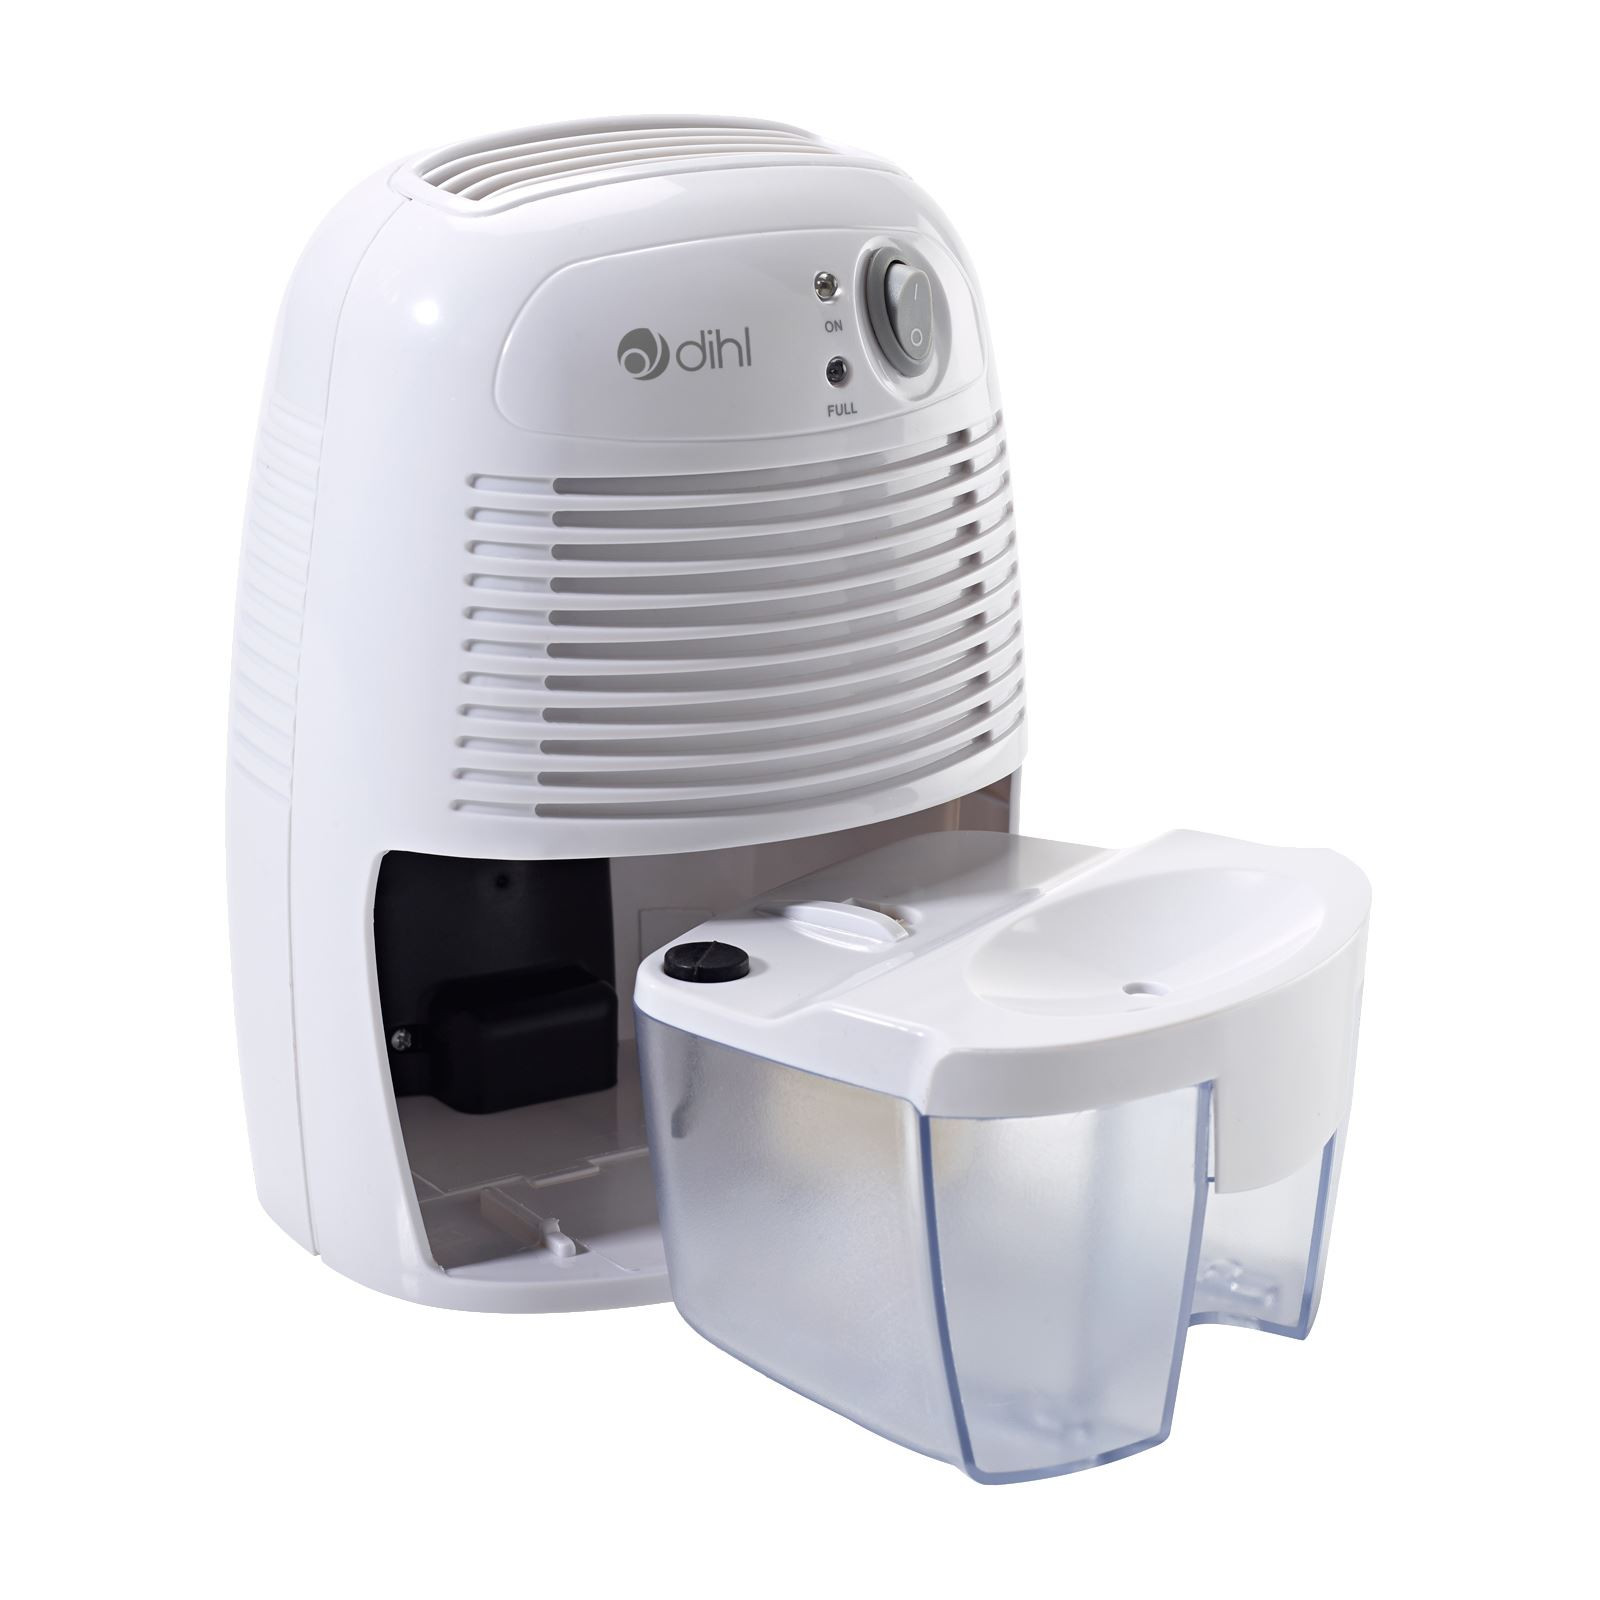 Small Dehumidifier For Bedroom
 500ml Dihl Mini Small Air Dehumidifier Home Bedroom